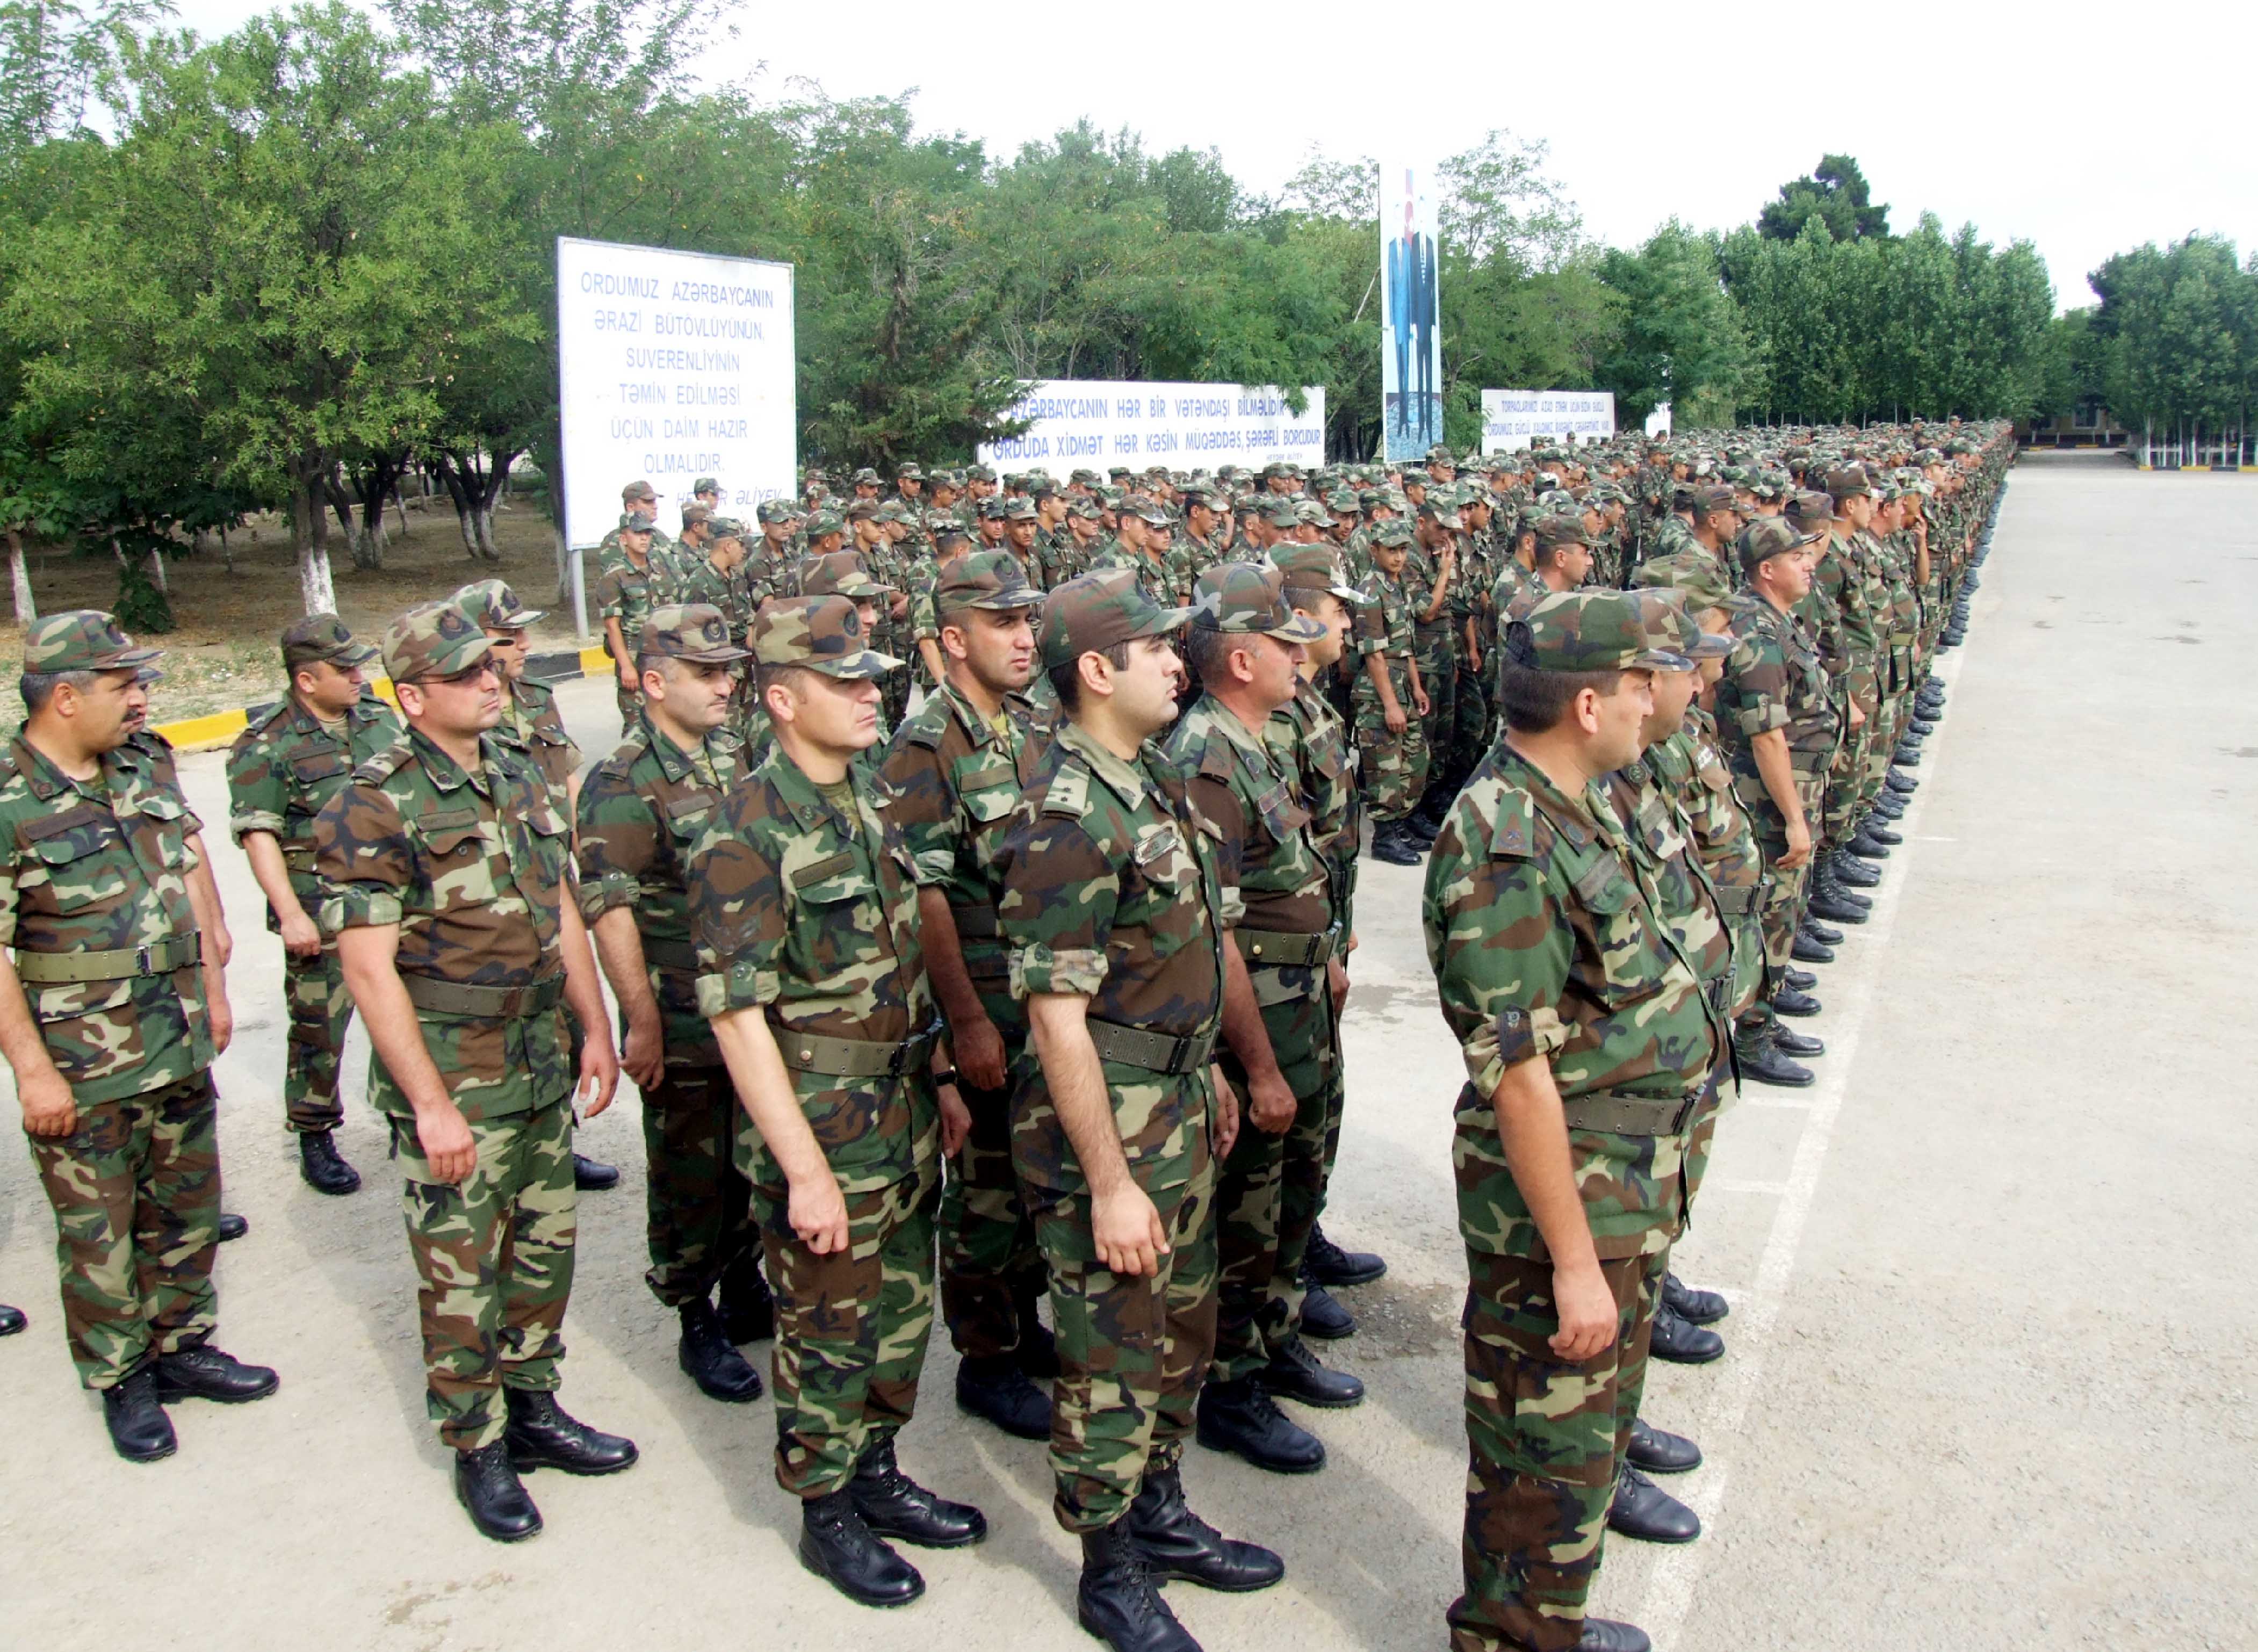 Crime rate reducing in Azerbaijan's army